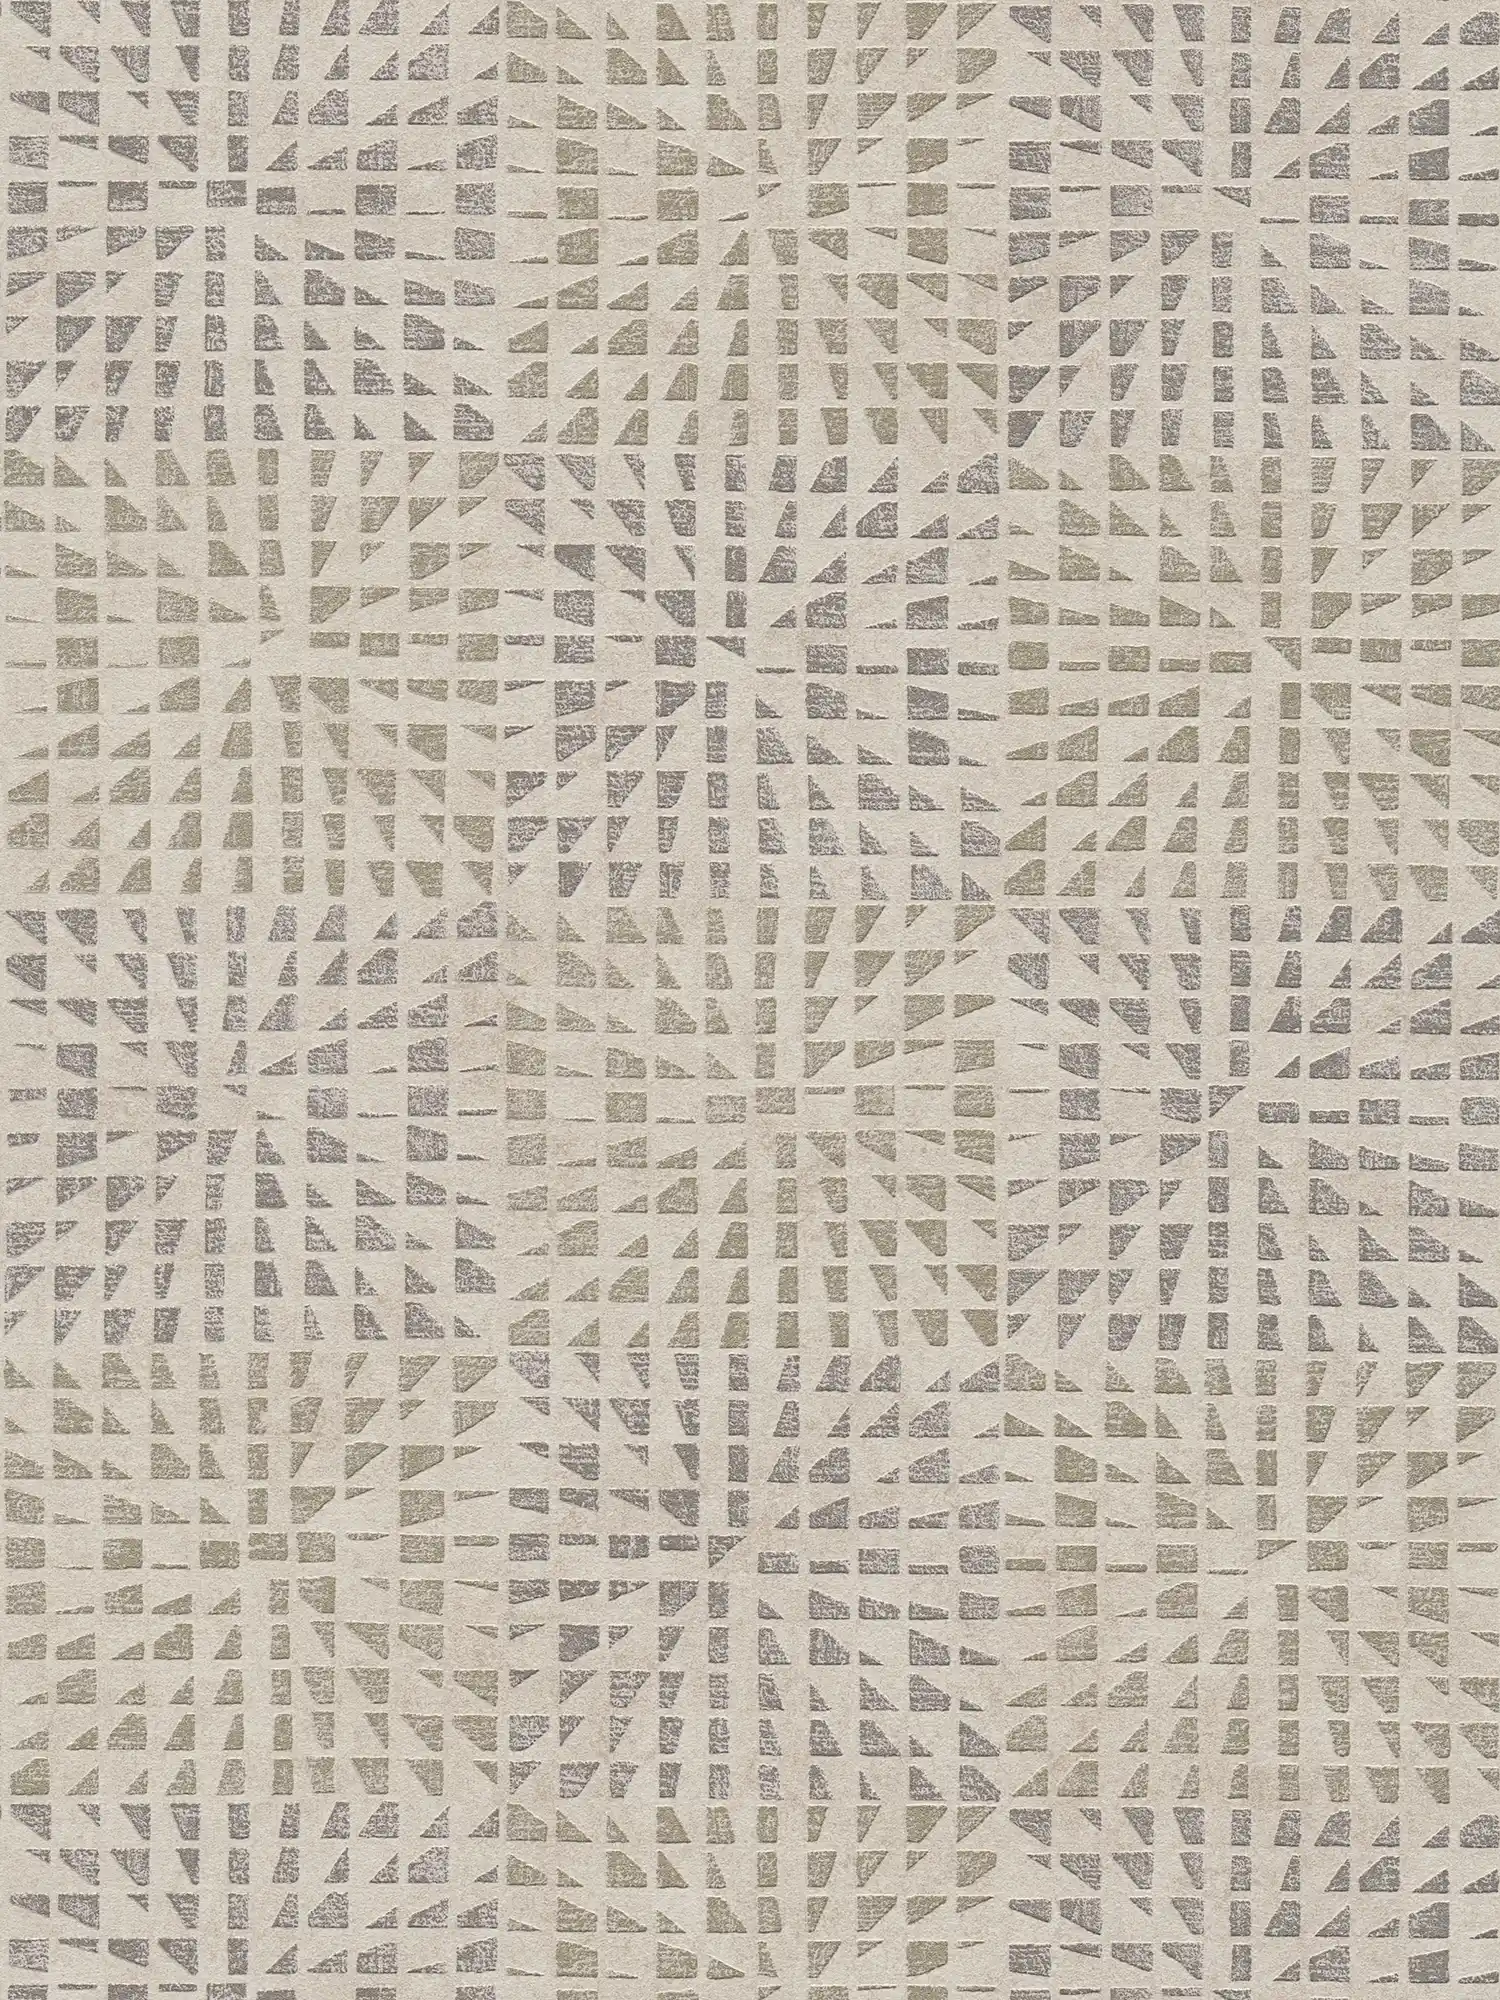 Ethno wallpaper with textured pattern & mosaic effect - grey, beige
